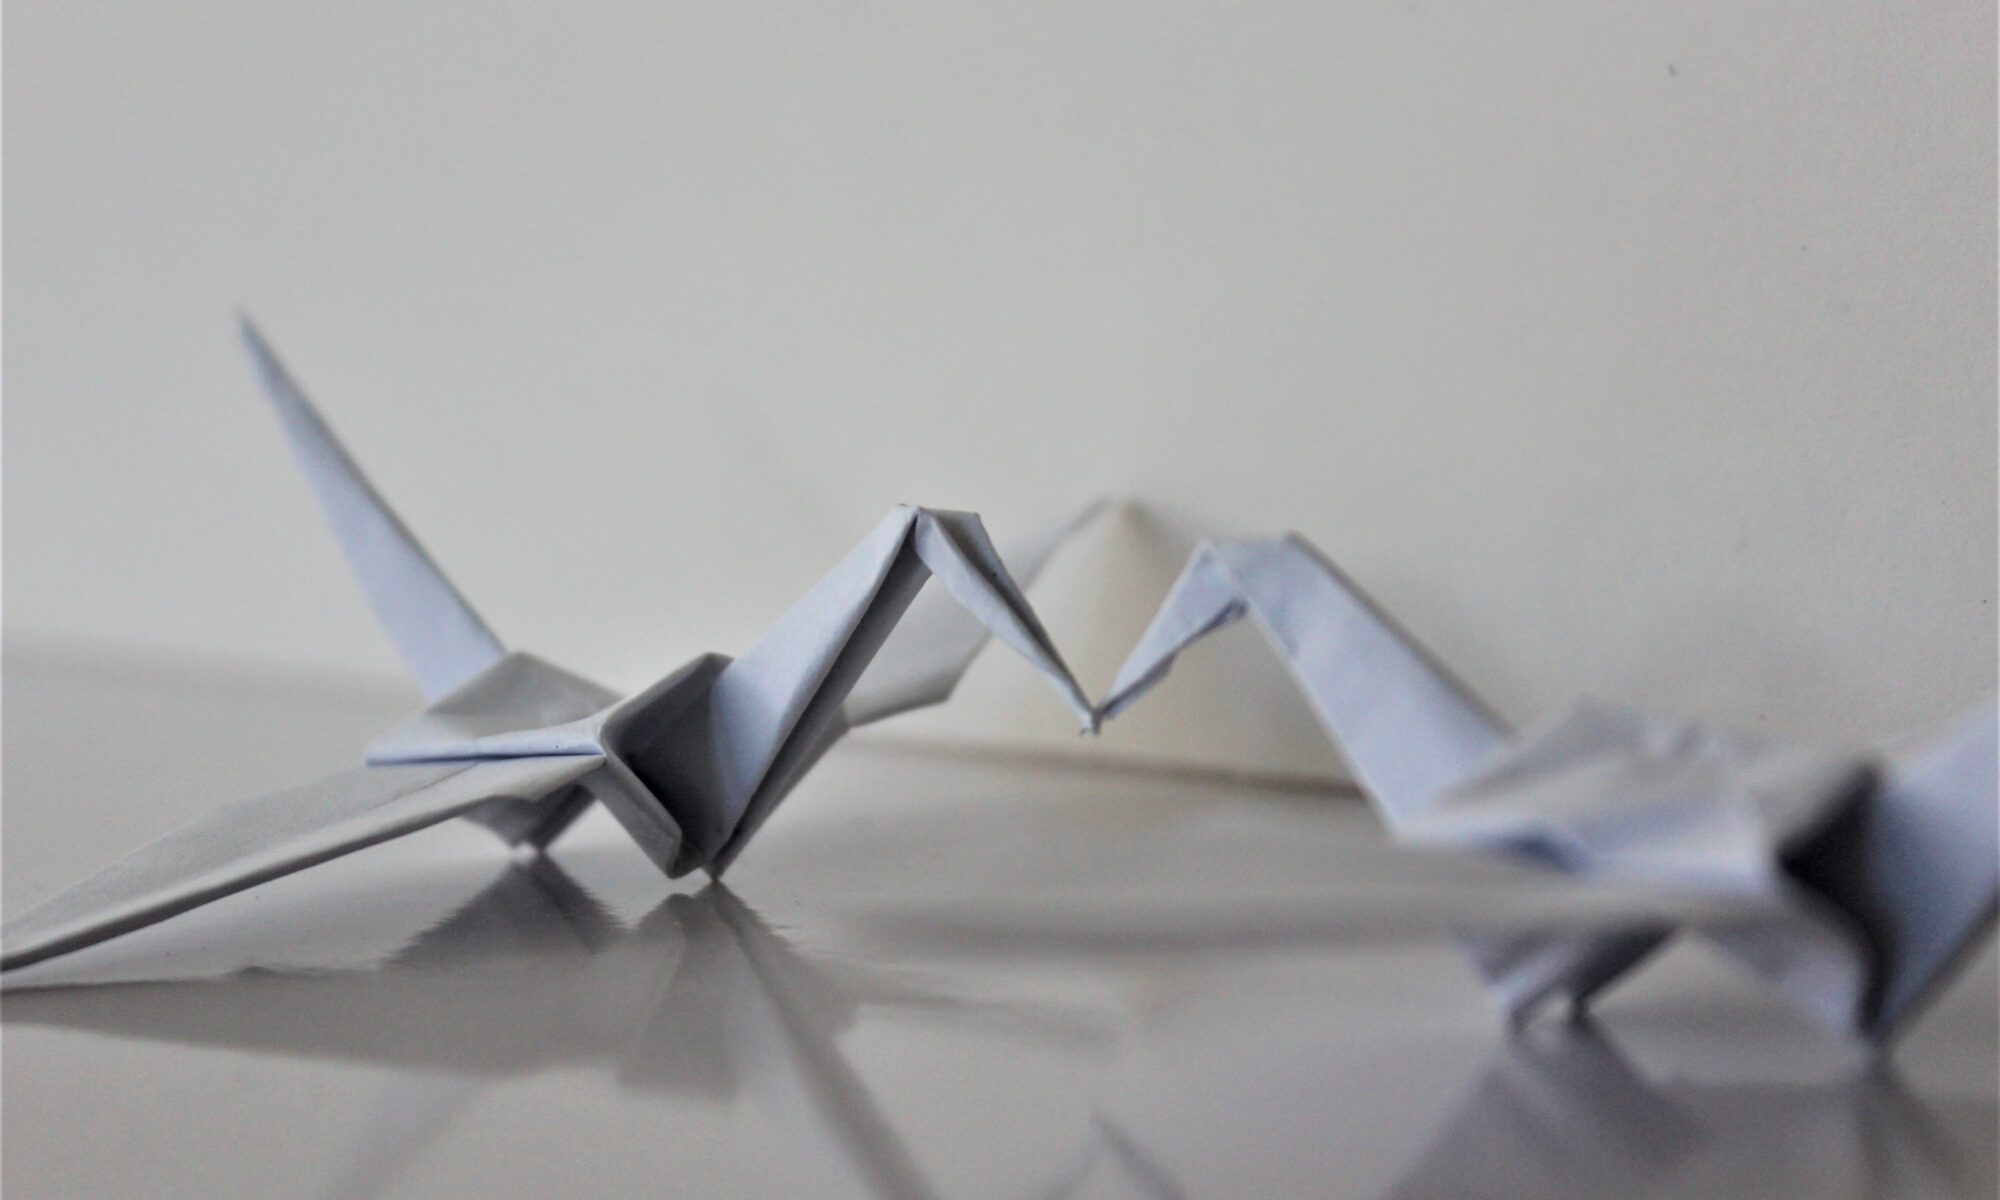 Two paper cranes